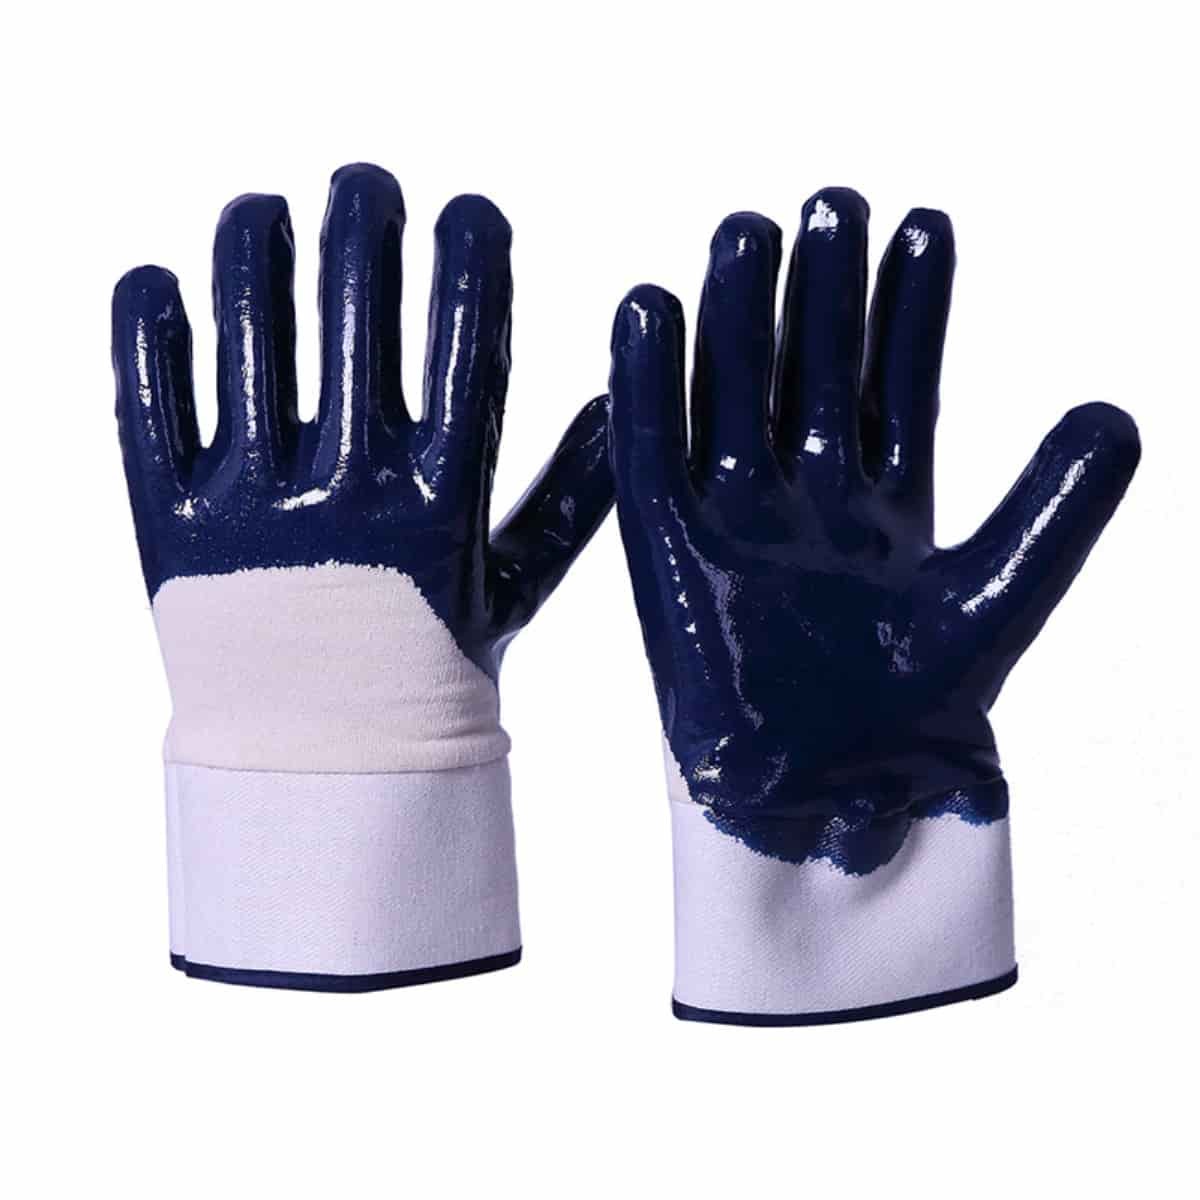 Usalama Cuff Predator Acid Oil Thibitisha Gloves Blue Nitrile Dipped na Anti Slip Dots